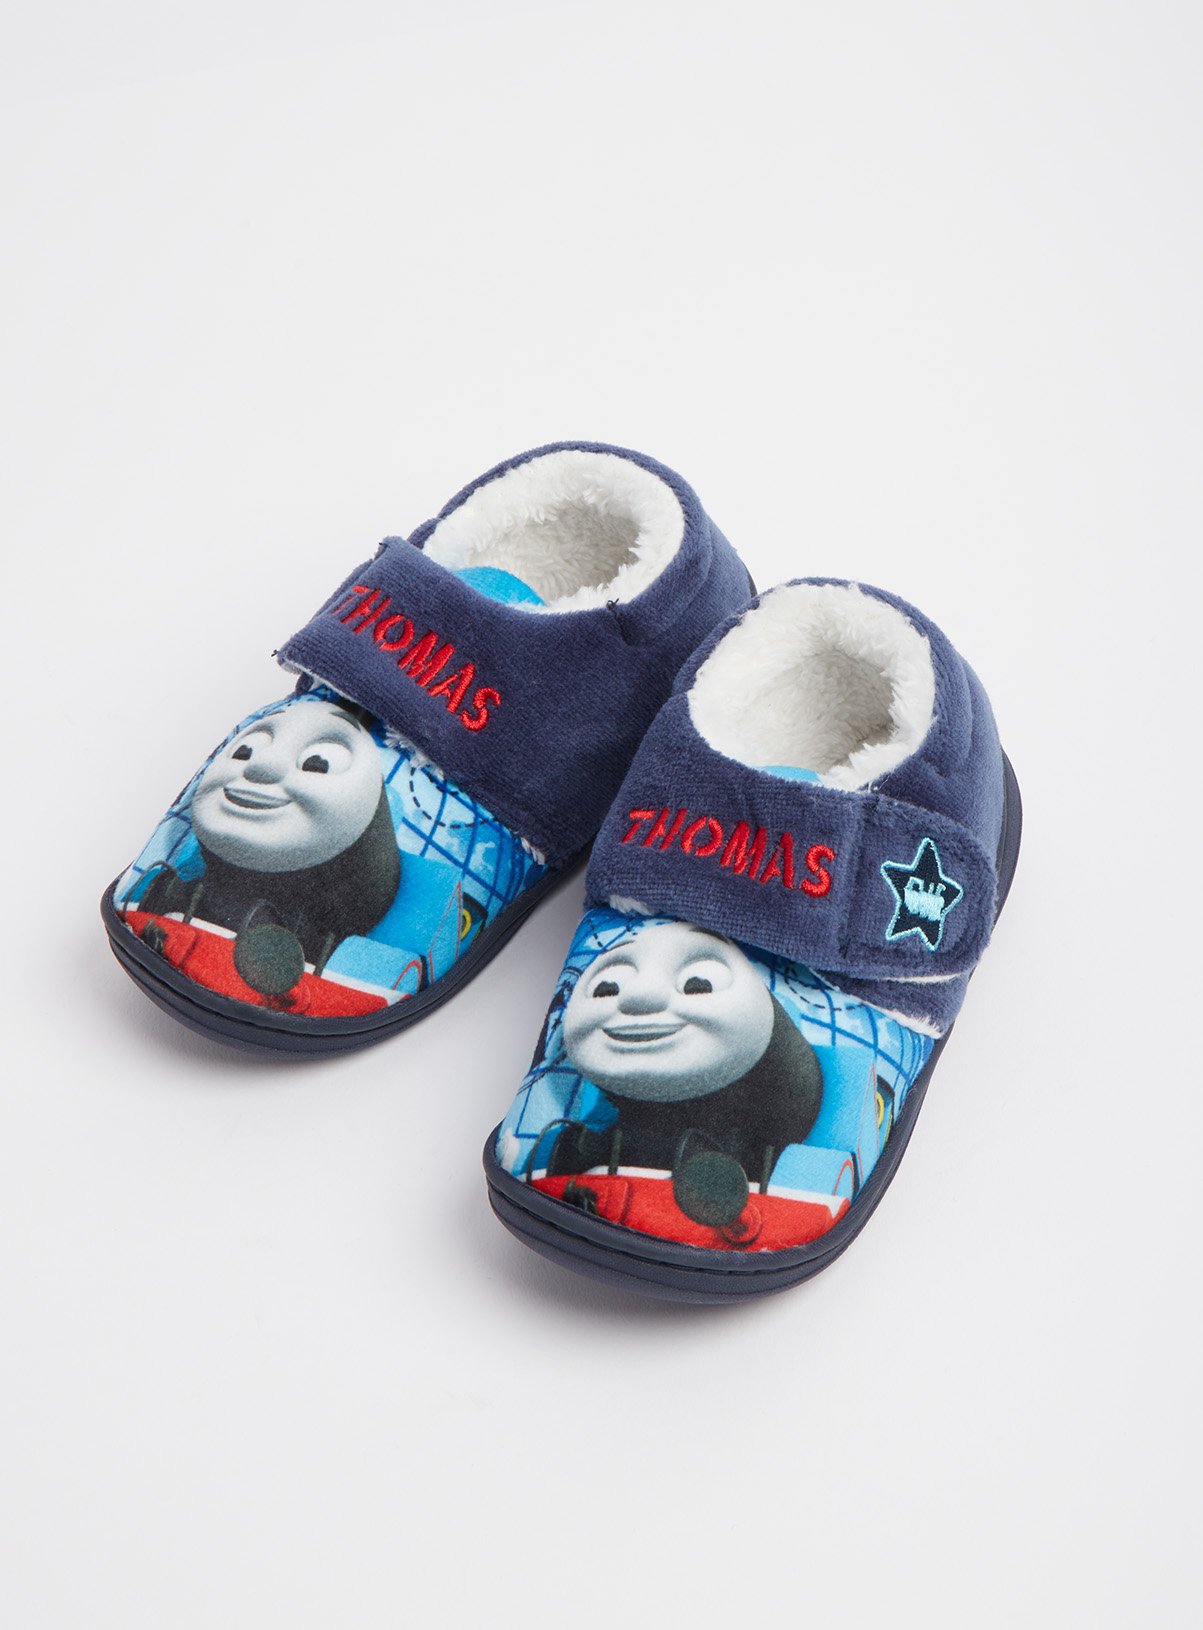 thomas slippers